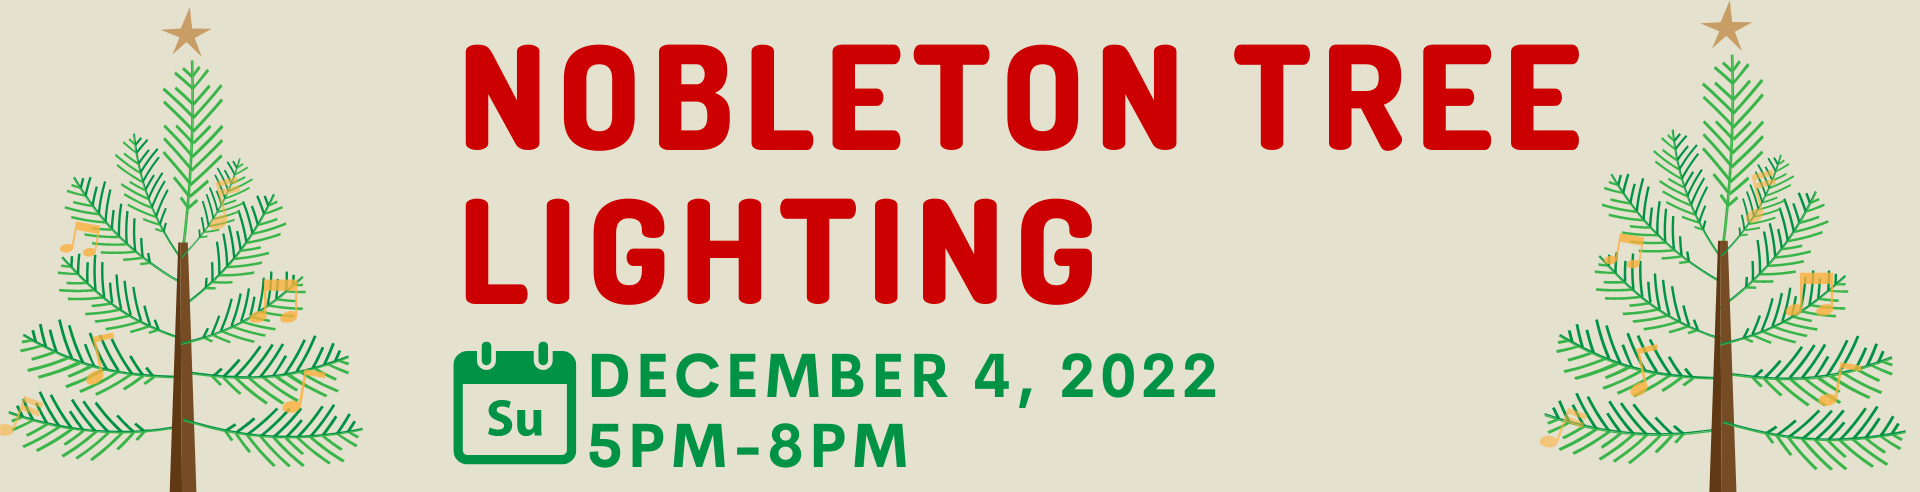 Nobleton Tree Lighting Sunday, December 4, 2022 5PM to 8PM